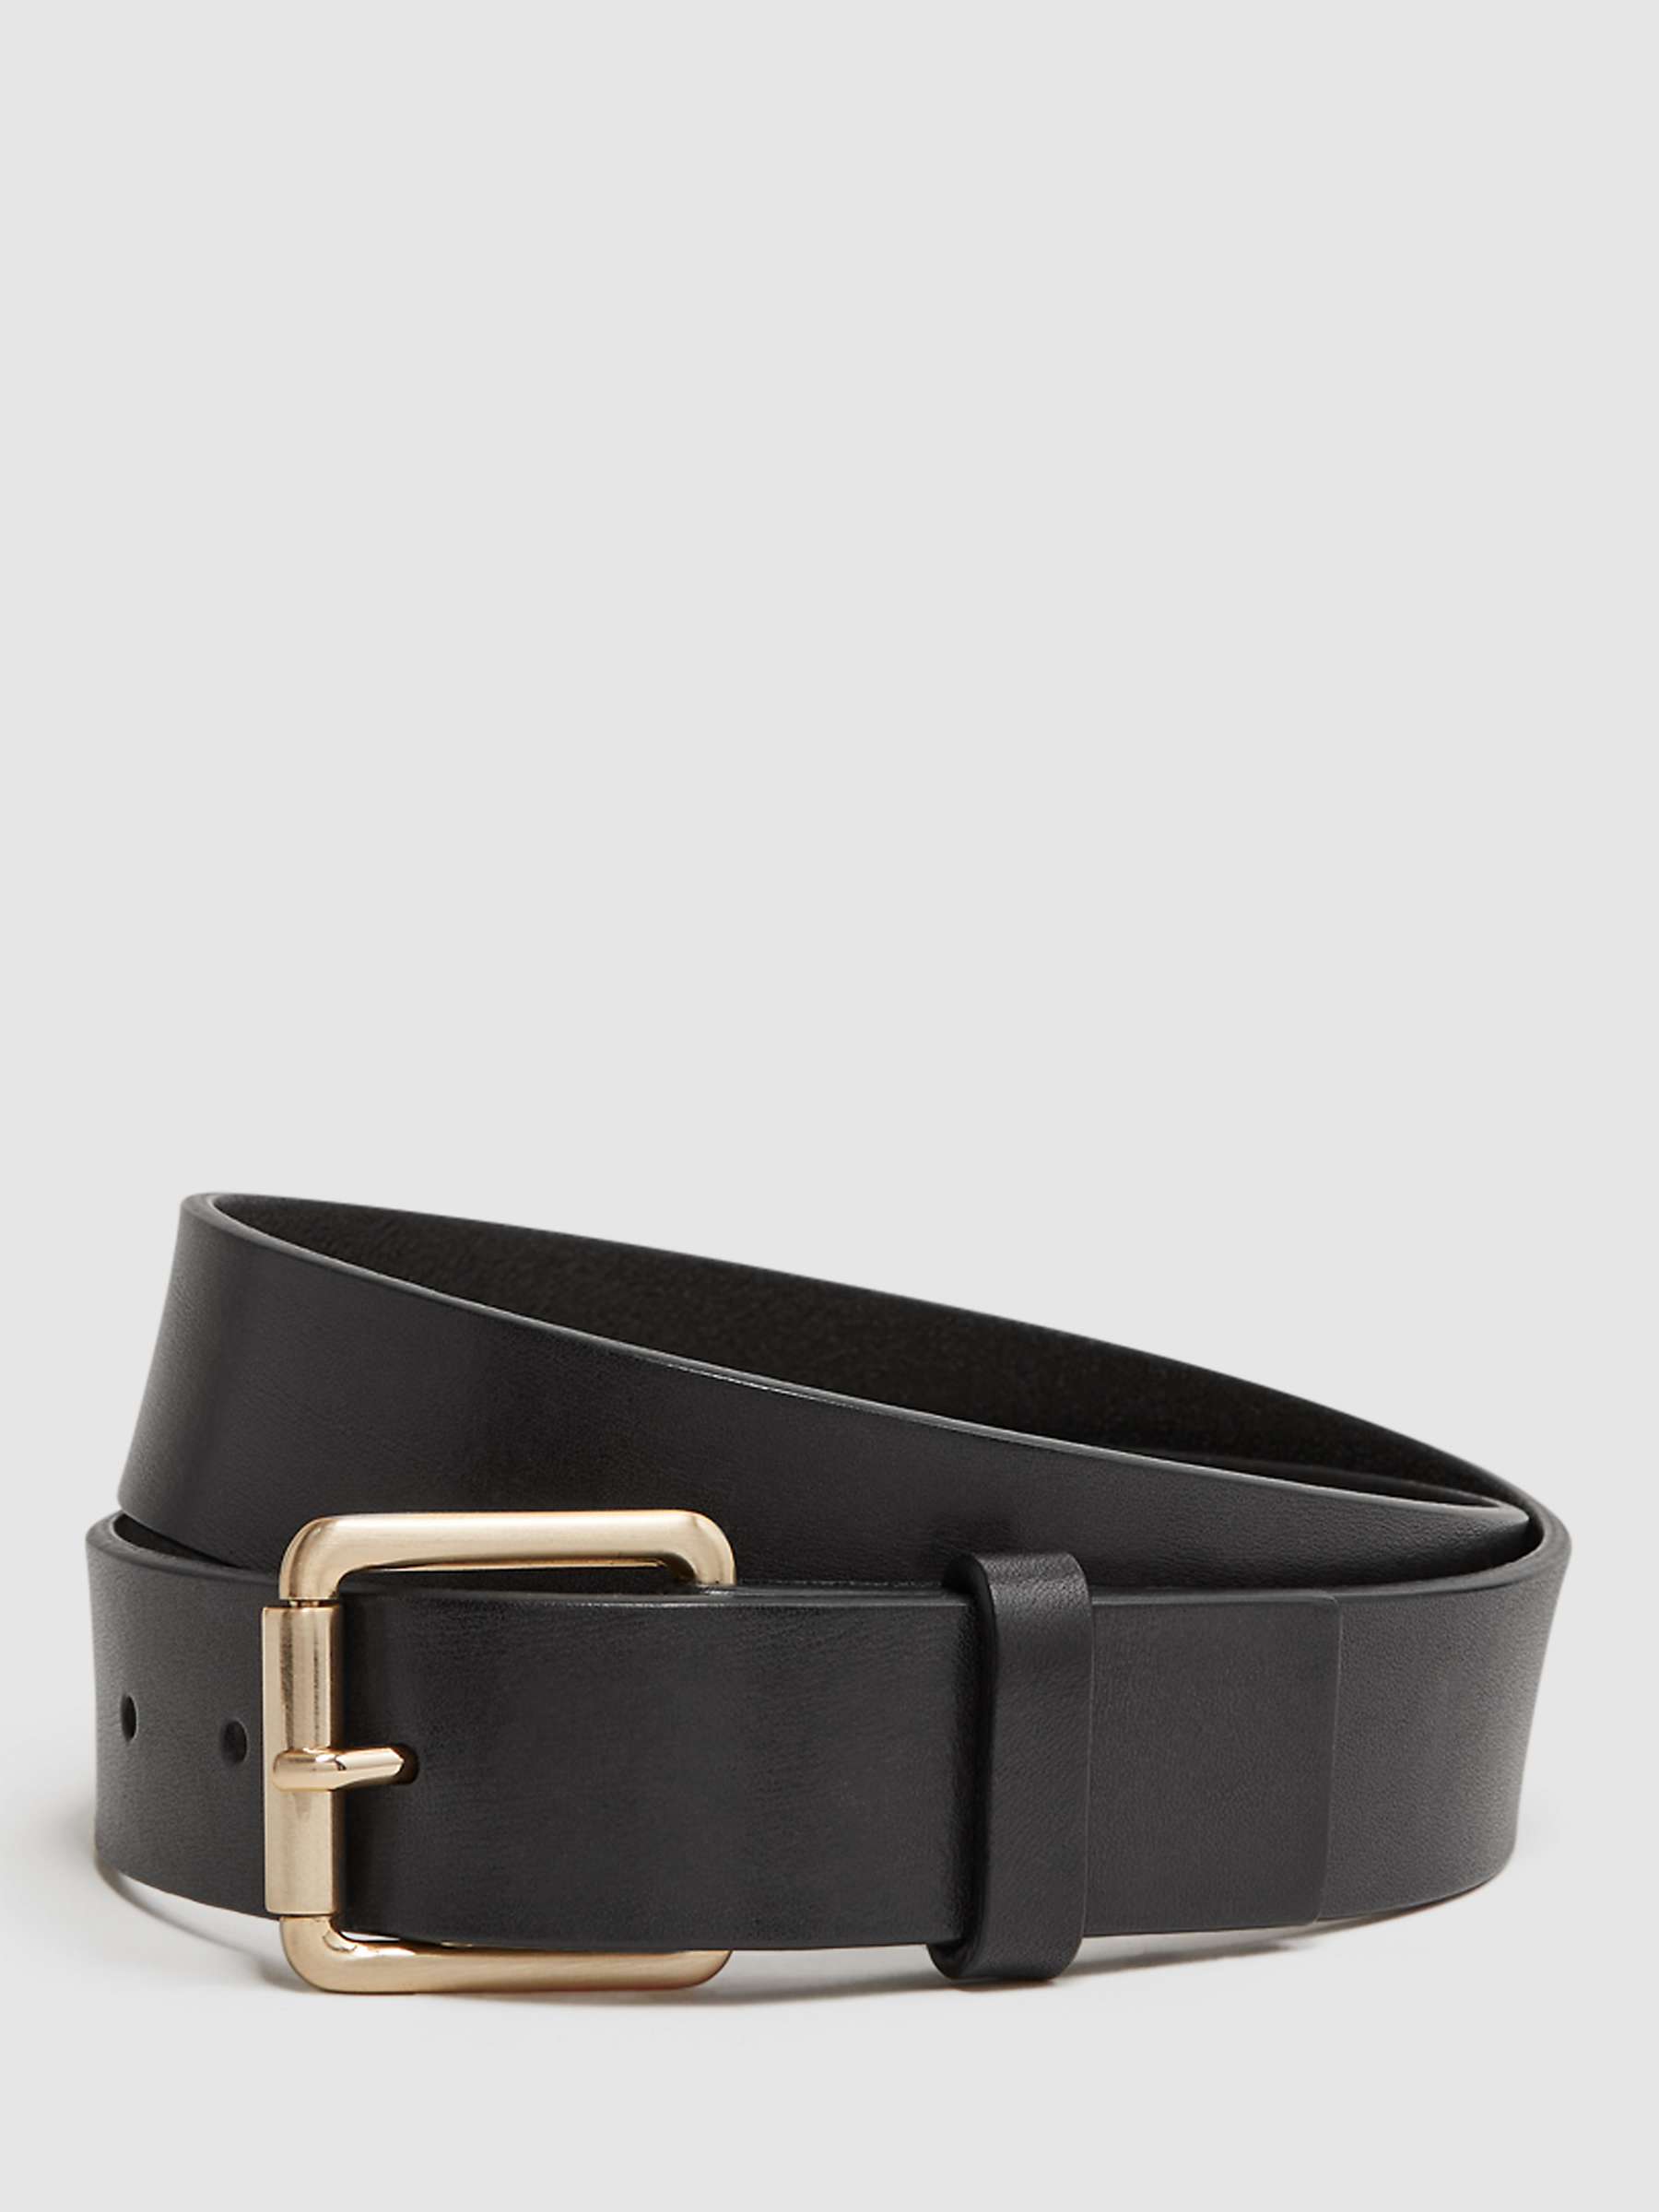 Reiss Grayson Leather Belt, Black at John Lewis & Partners